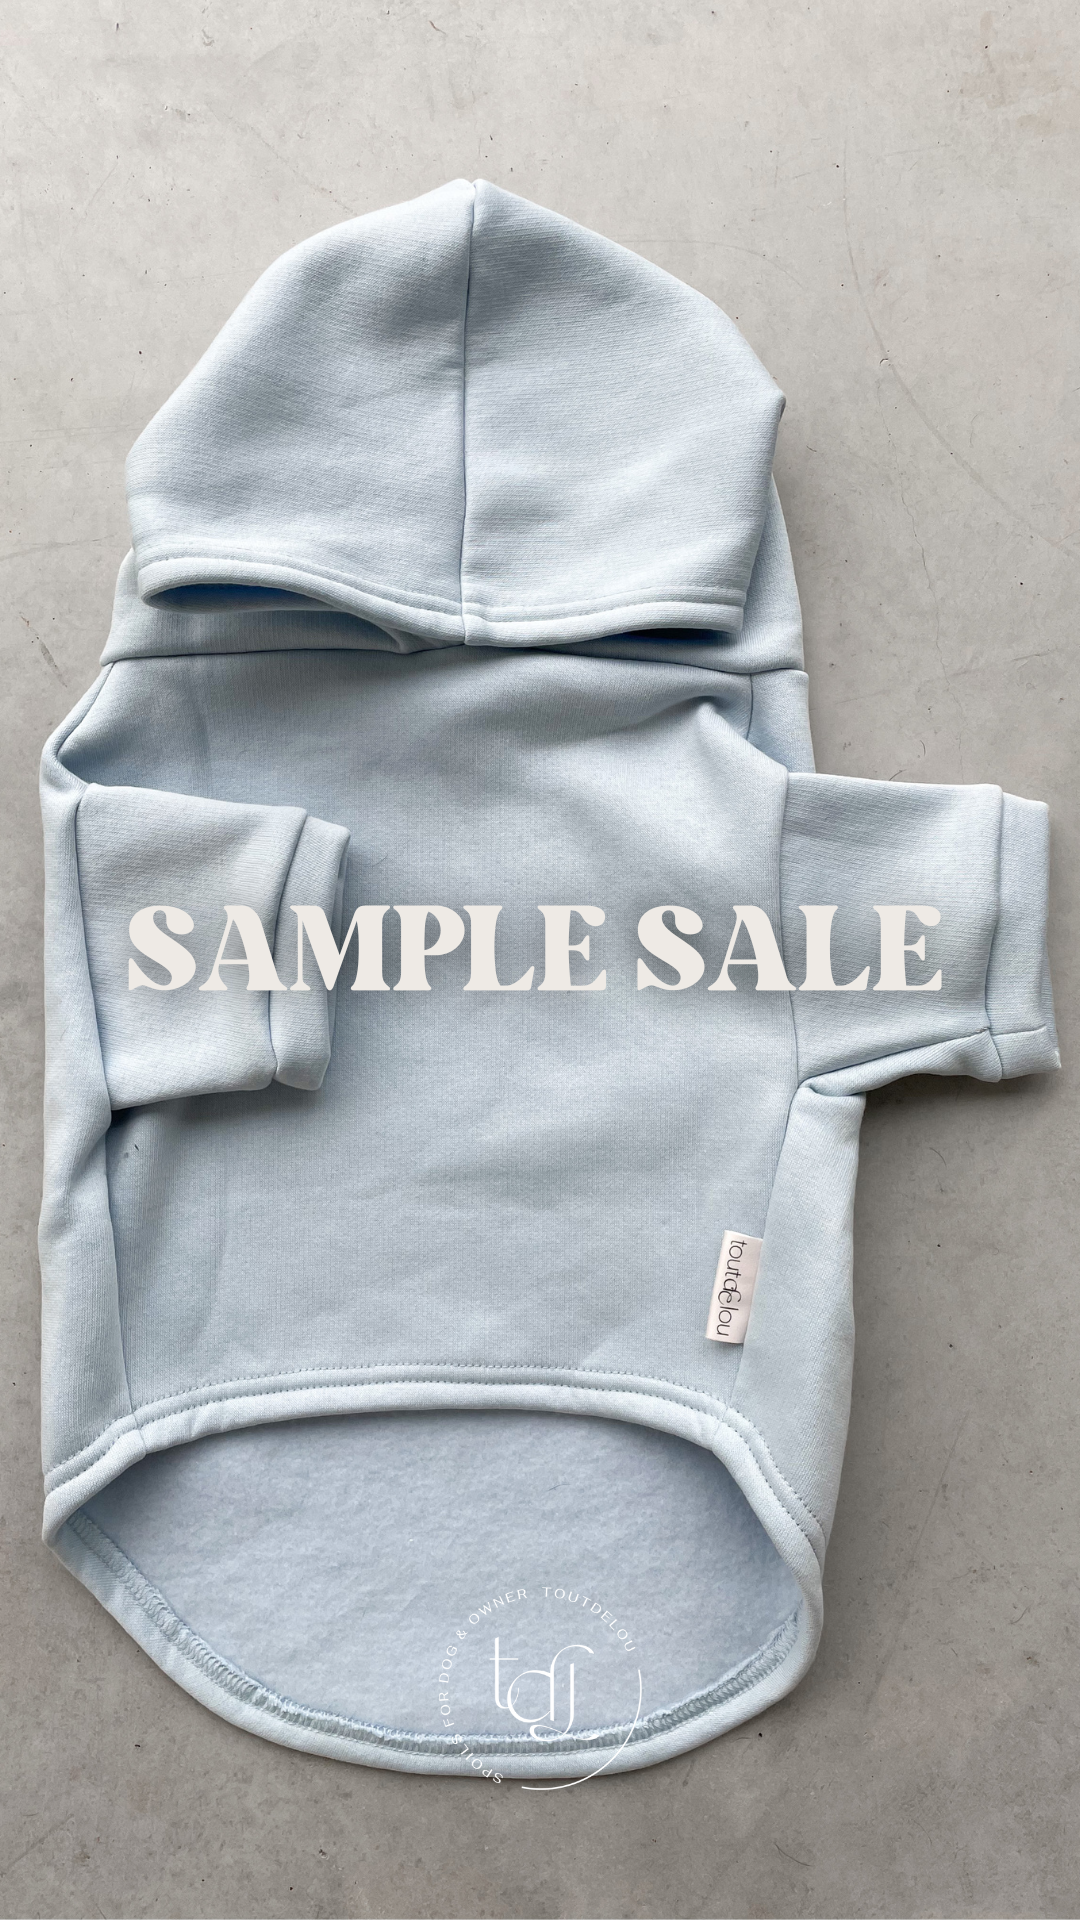 Sample sale - baby blue dog sweater L